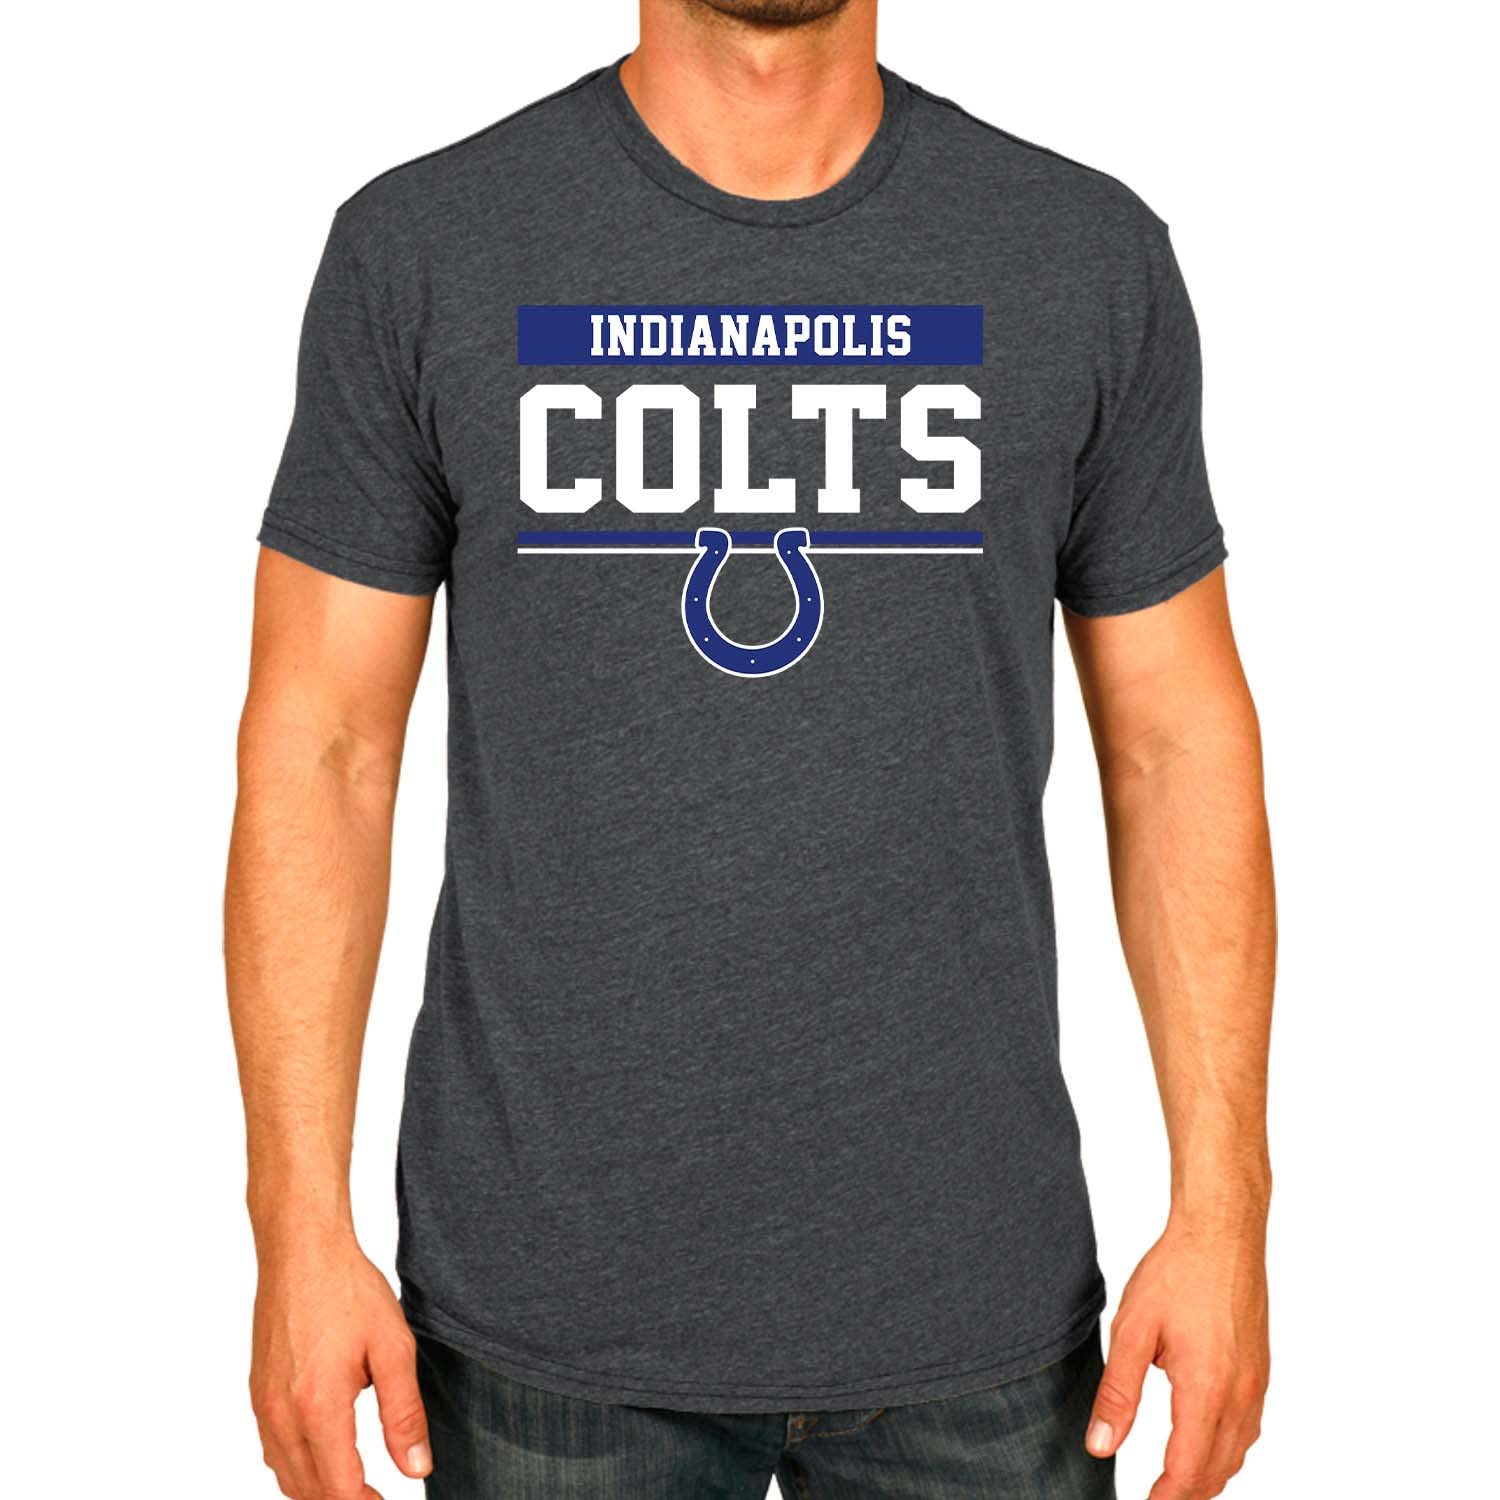 Indianapolis Colts T shirt  Shirts, Team apparel, Nfl team apparel